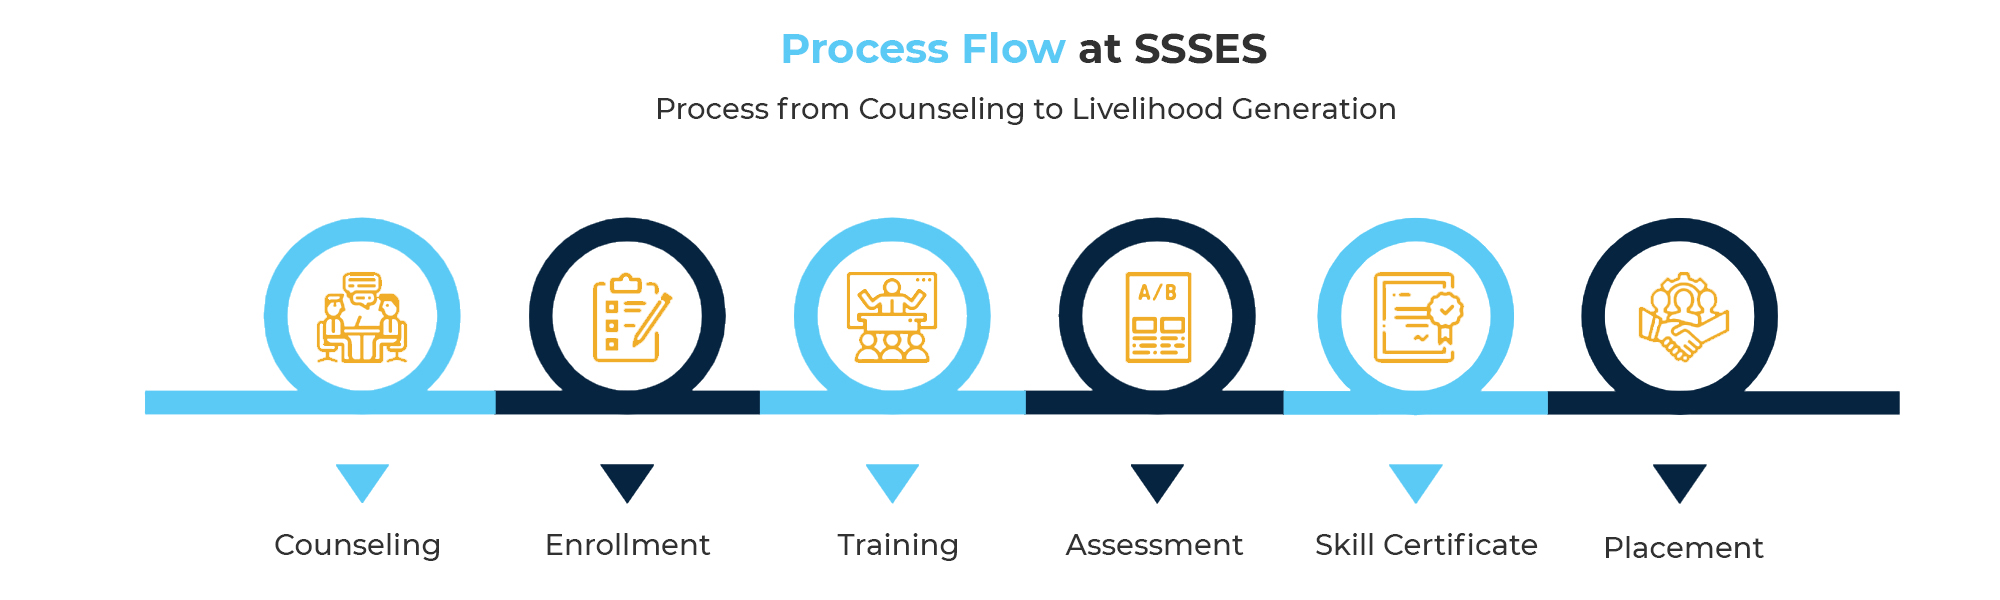 Process Flow at SSSES